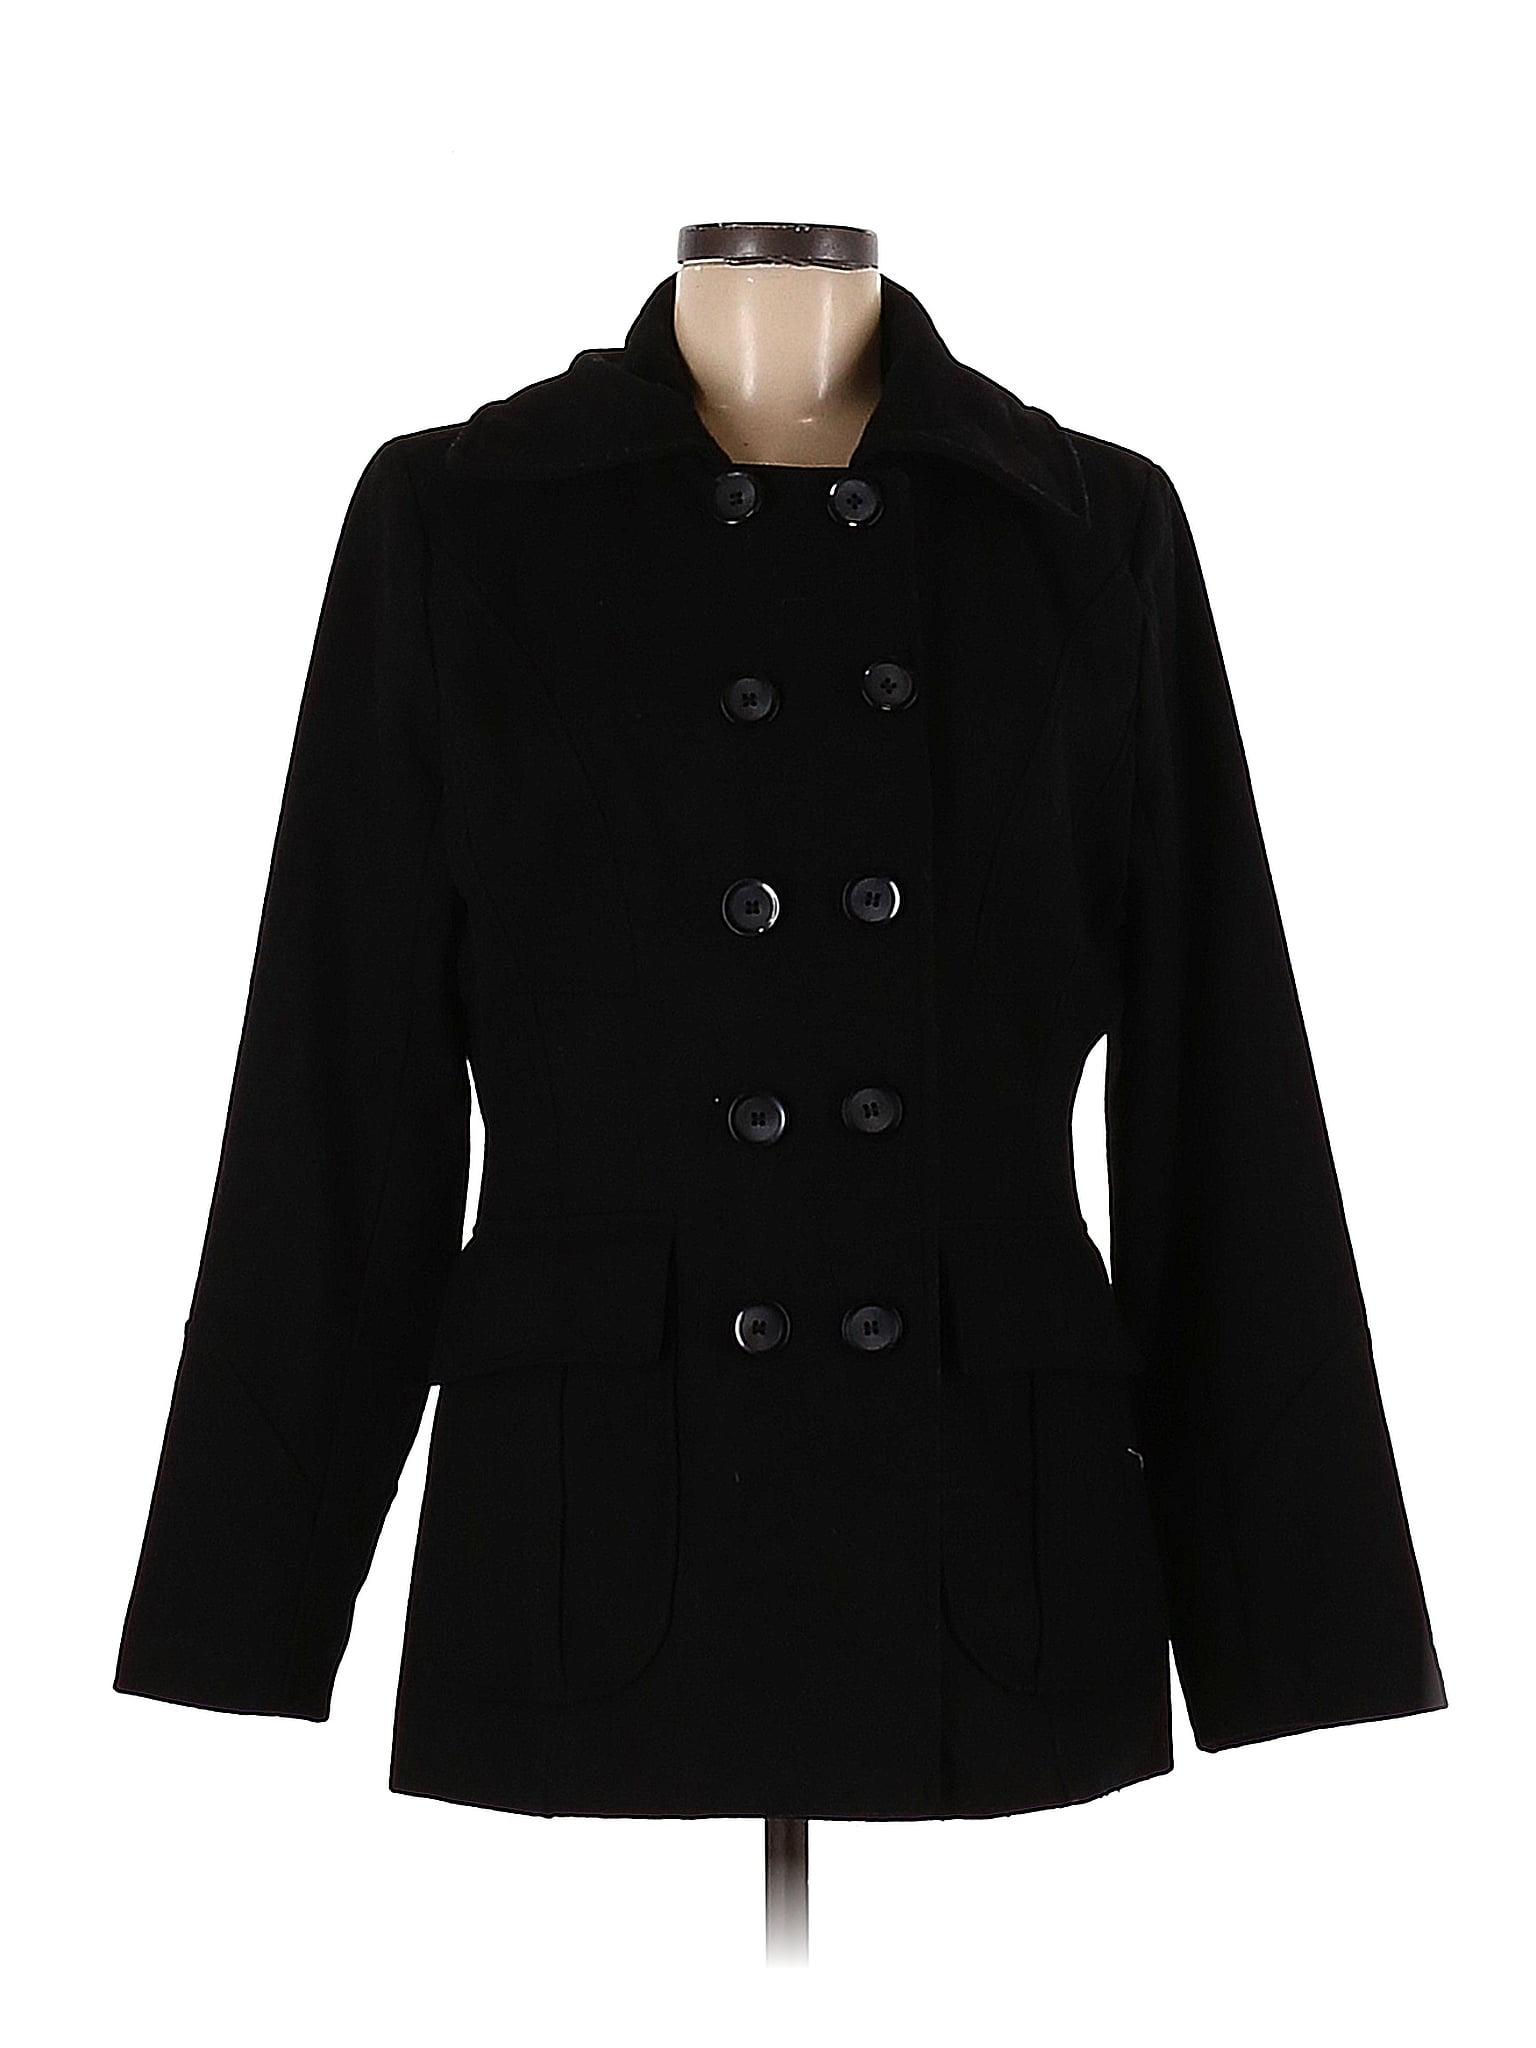 New York & Company Solid Black Wool Coat Size M - 71% off | thredUP